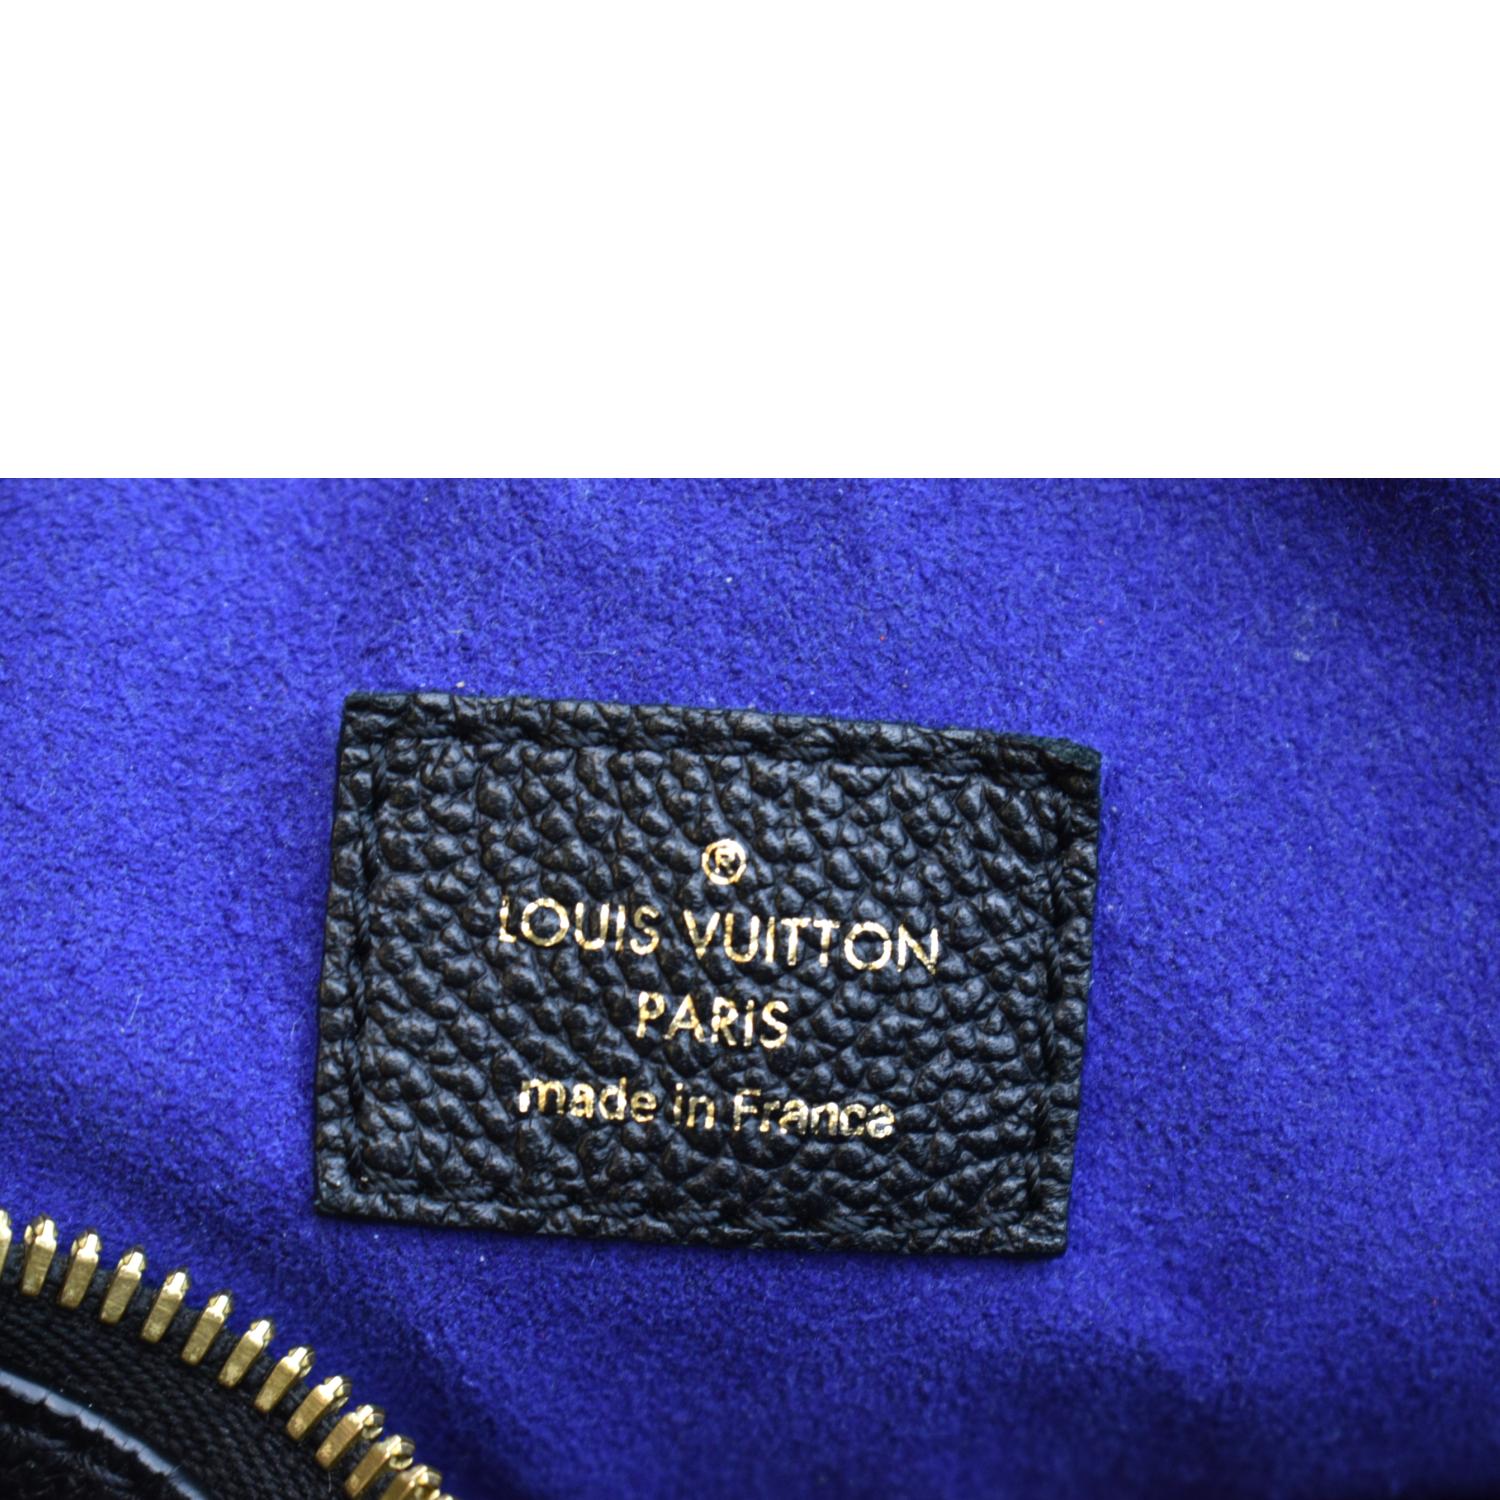 Maida leather handbag Louis Vuitton Black in Leather - 34346469